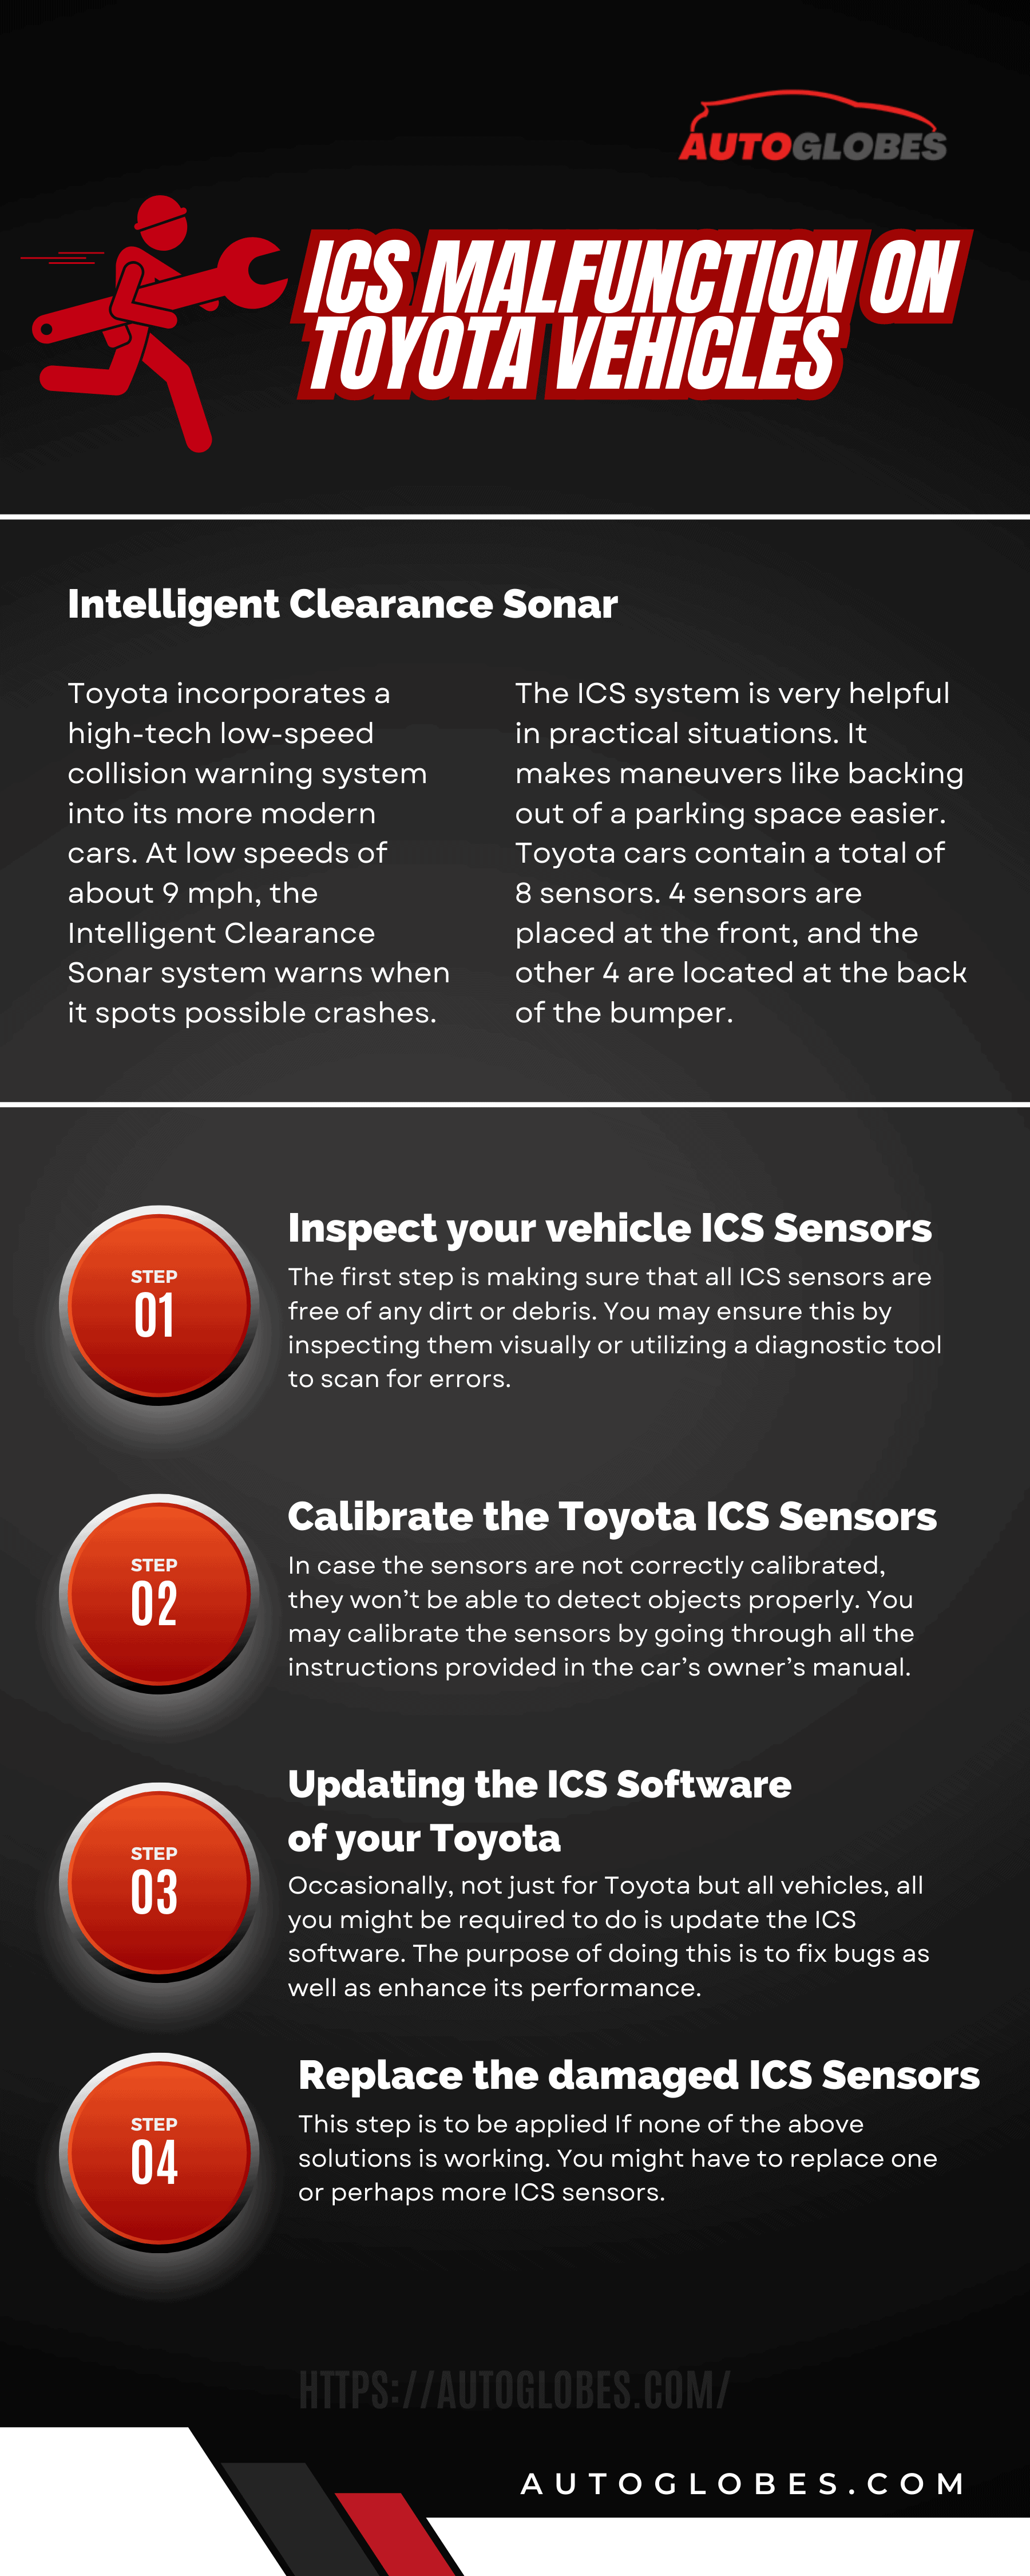 ICS Malfunction on Toyota Vehicles Infographic